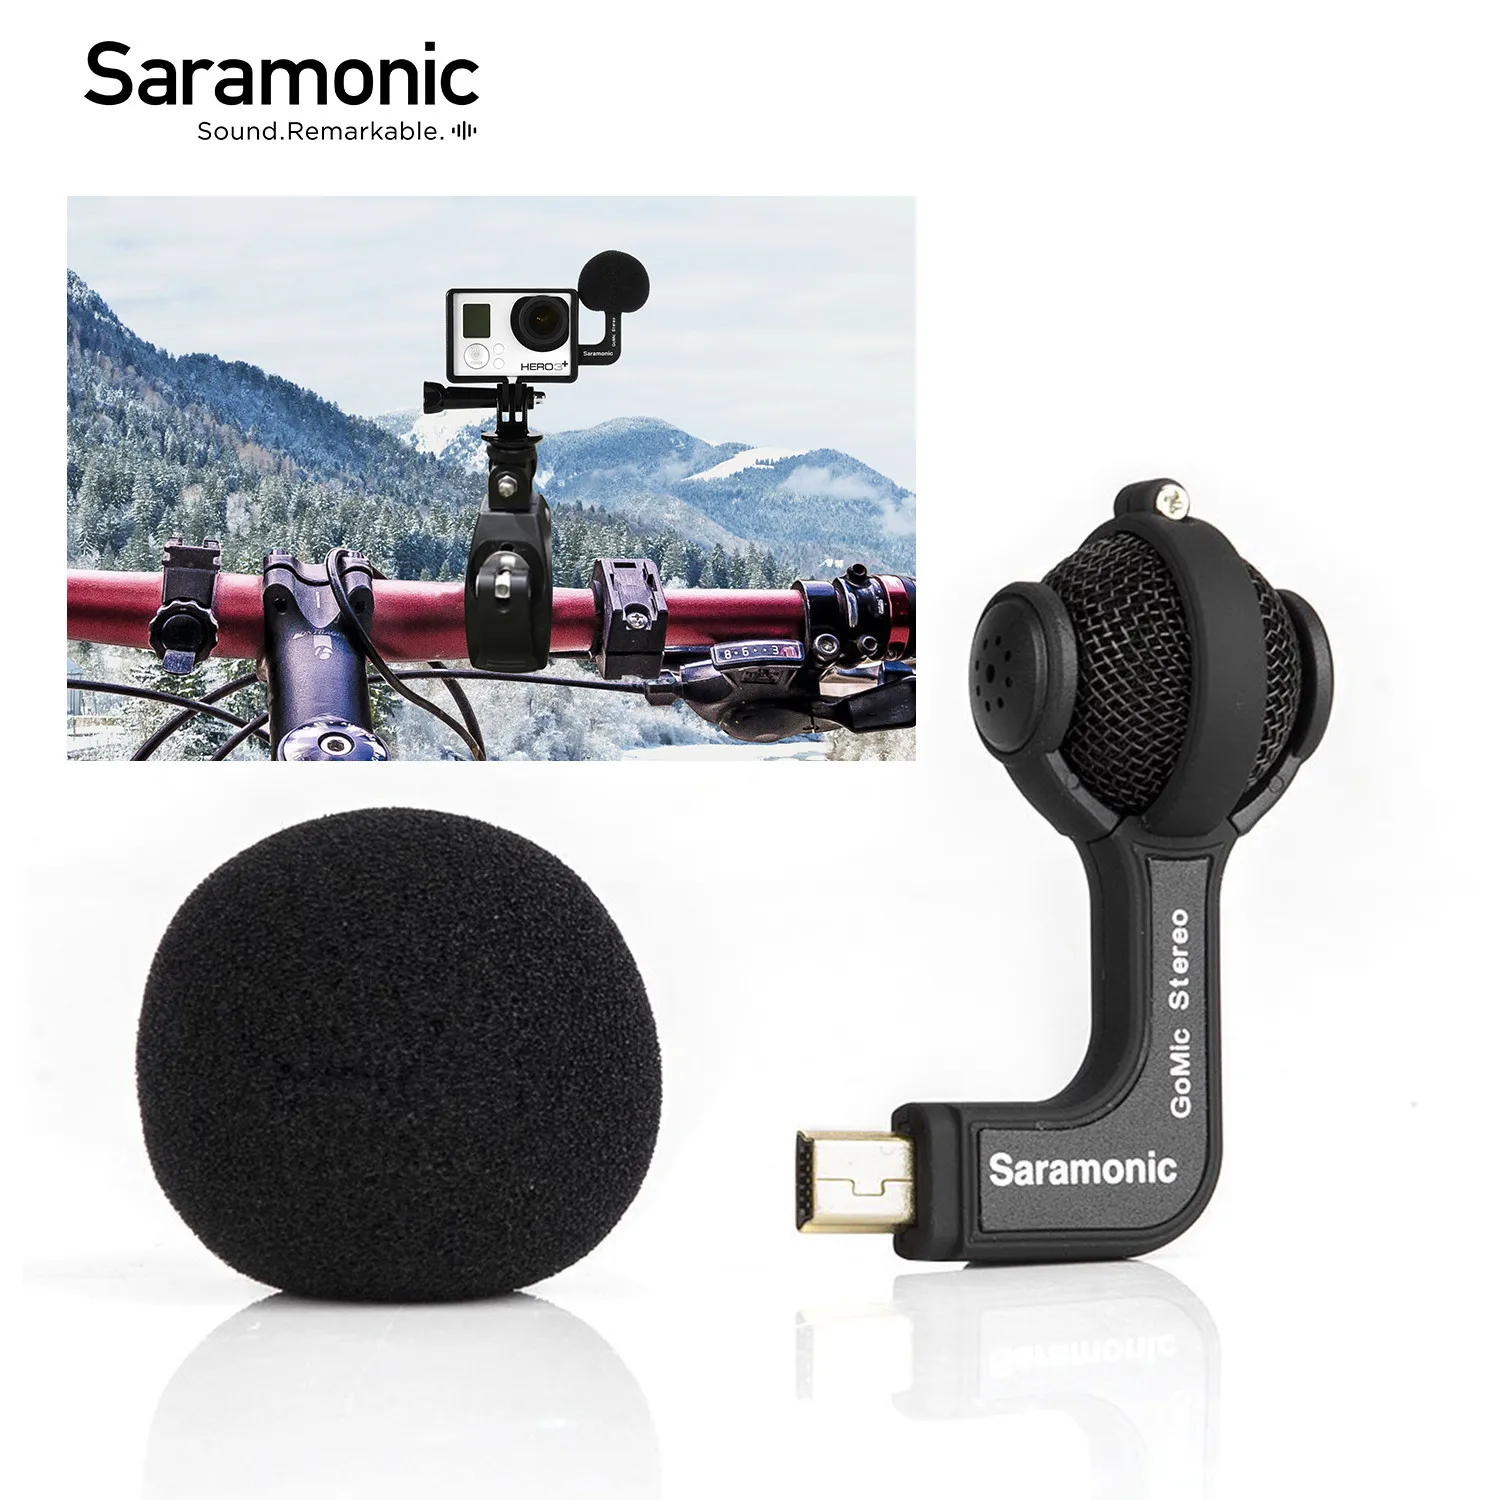 

Saramonic G-Mic Professional Stereo Mini GoPro Condenser Microphone for GoPro Hero4 Hero3+ Hero3 Cameras Plug & Play Microphone